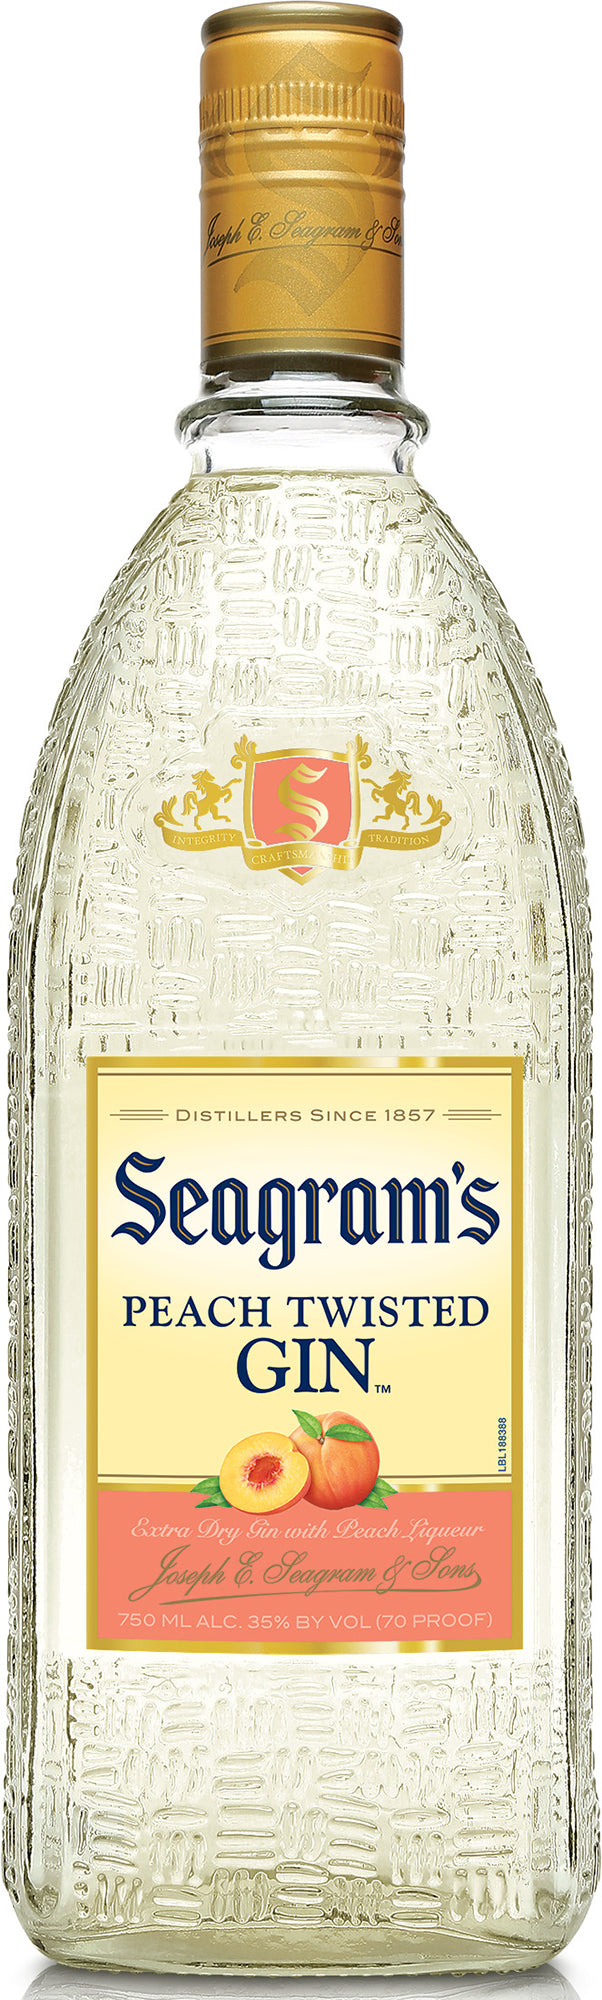 SEAGRAM'S PEACH TWISTED GIN